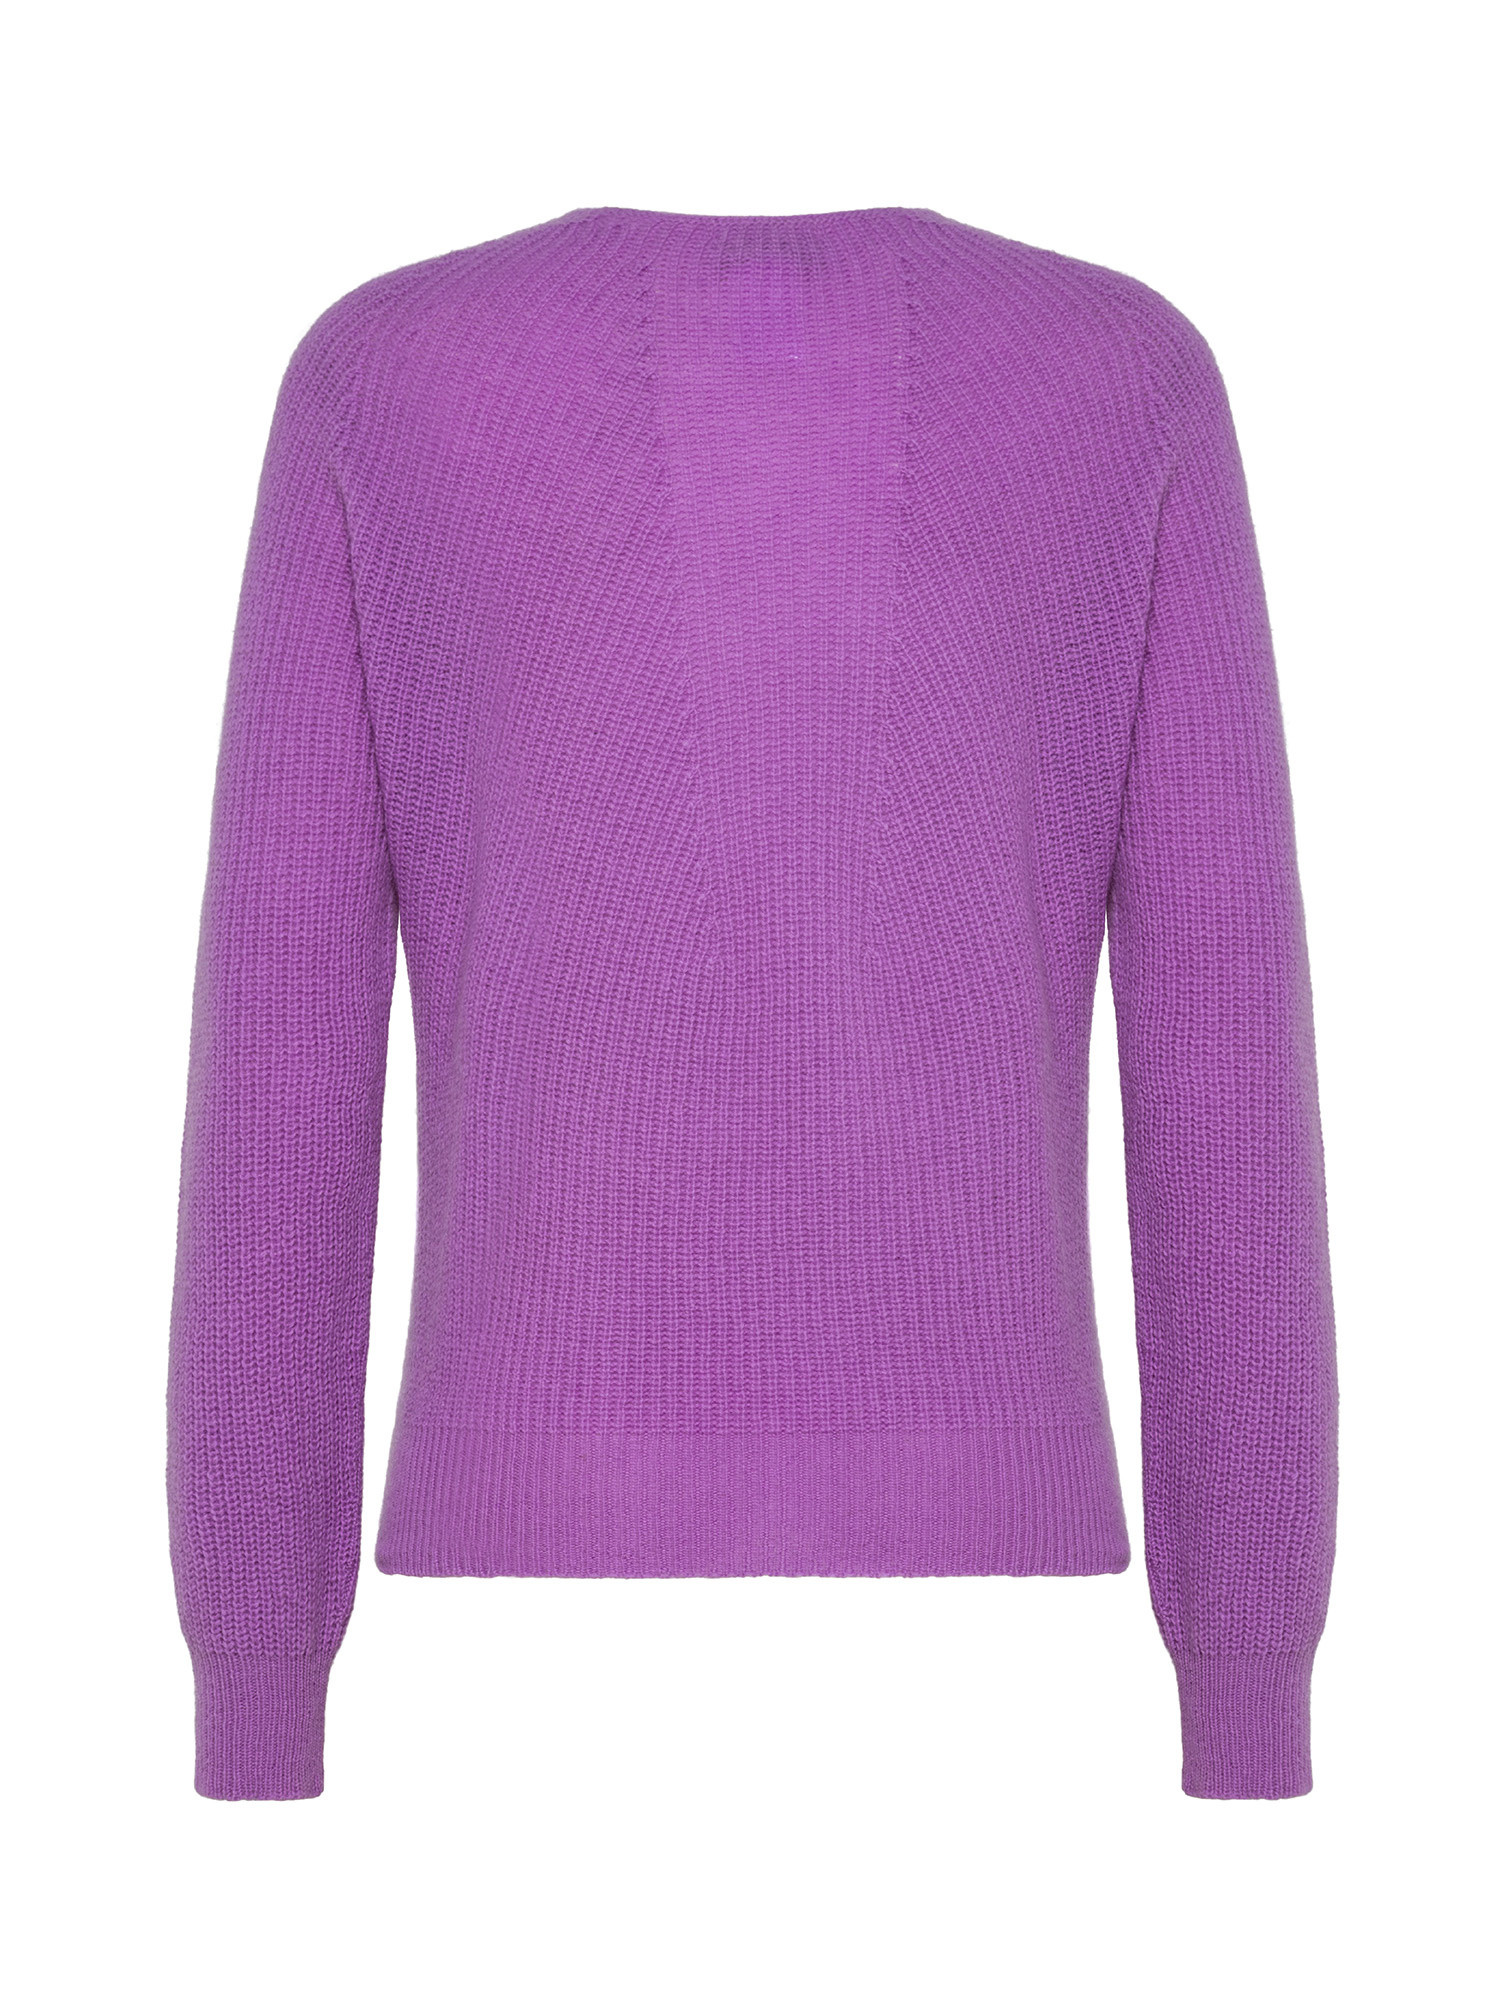 K Collection - V-neck sweater, Purple Lilac, large image number 1